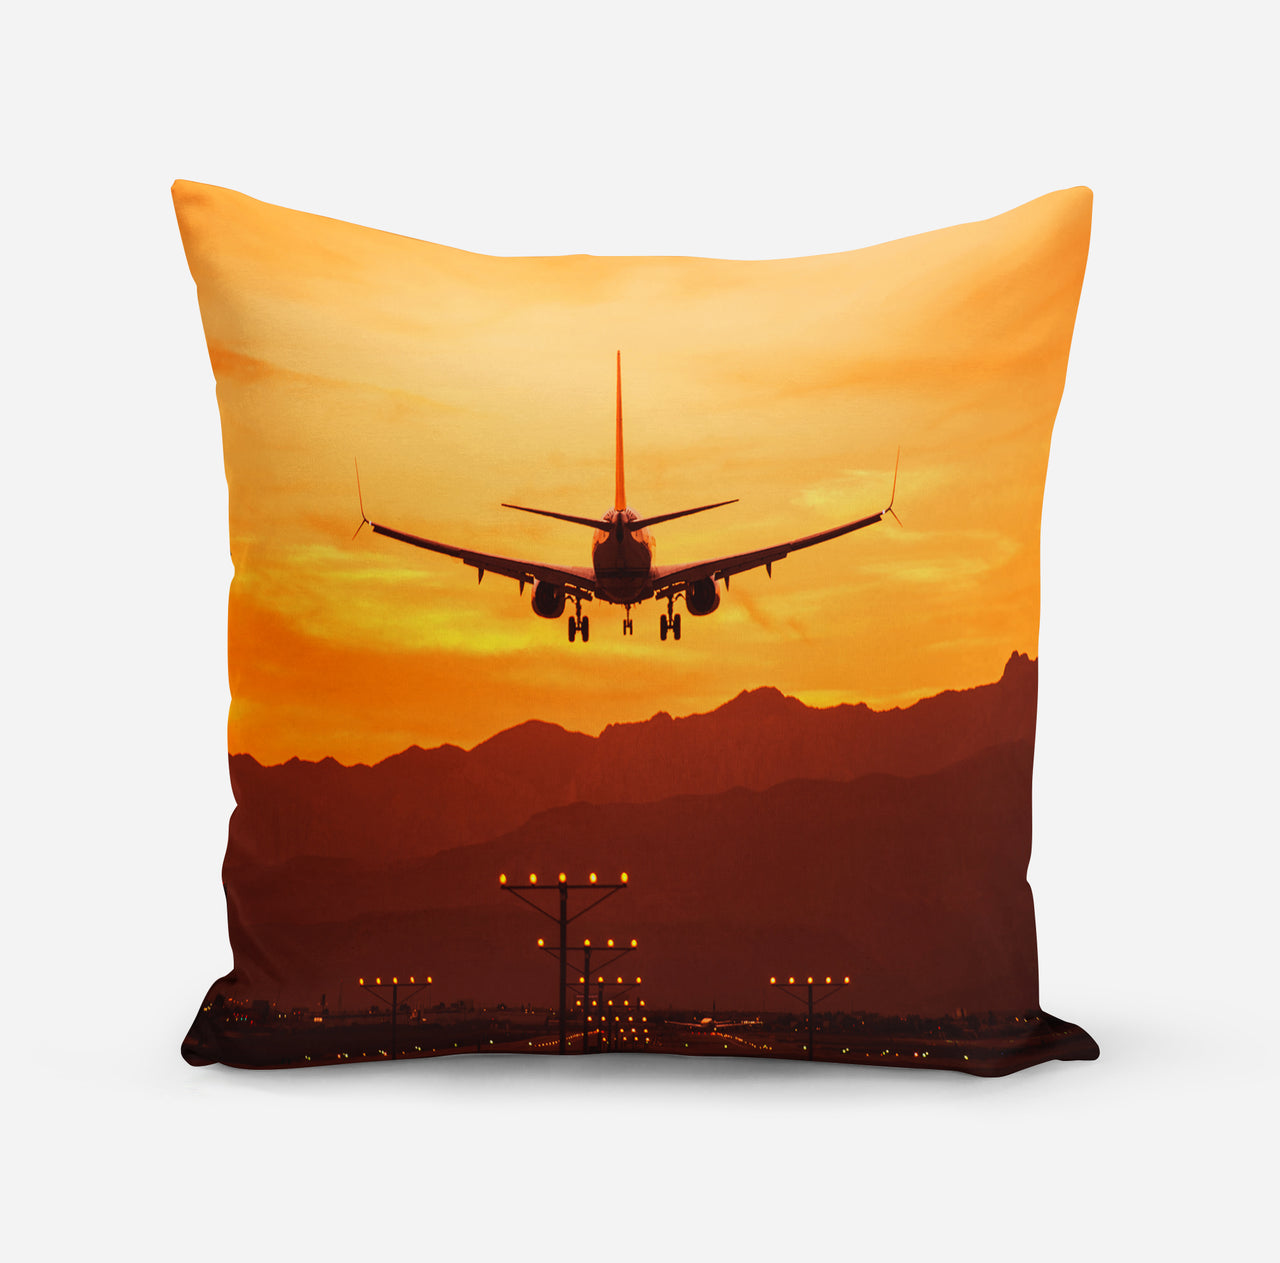 Landing Aircraft During Sunset Designed Pillows